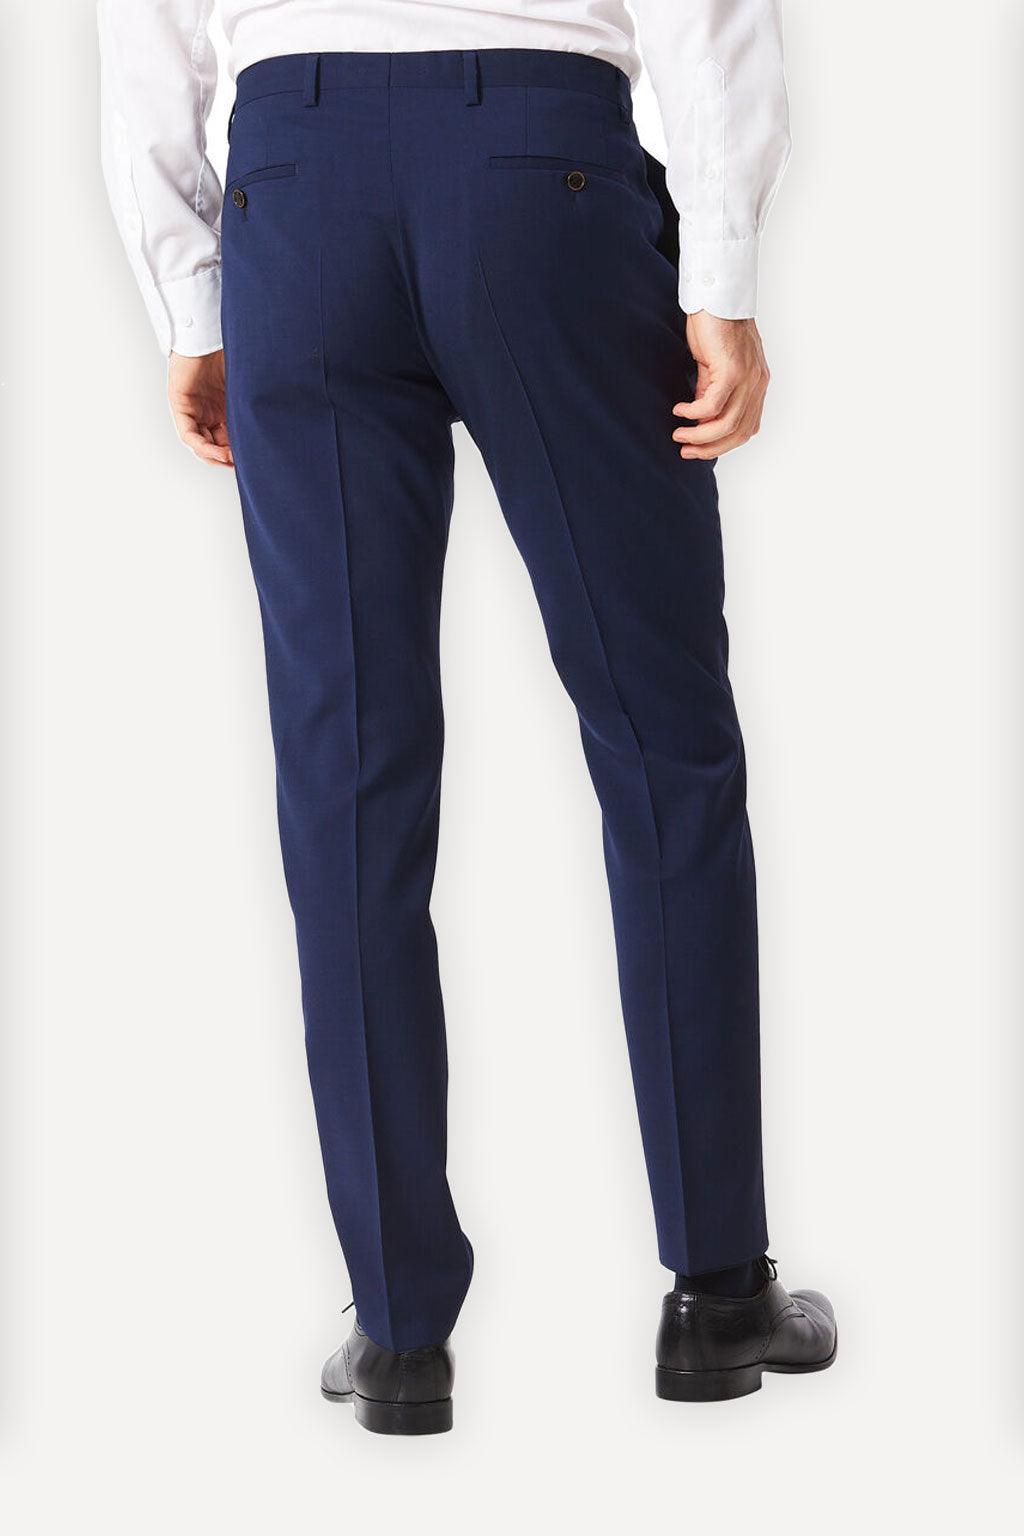 Roy Robson Shape pantalon blauw | Big Boss | the menswear concept